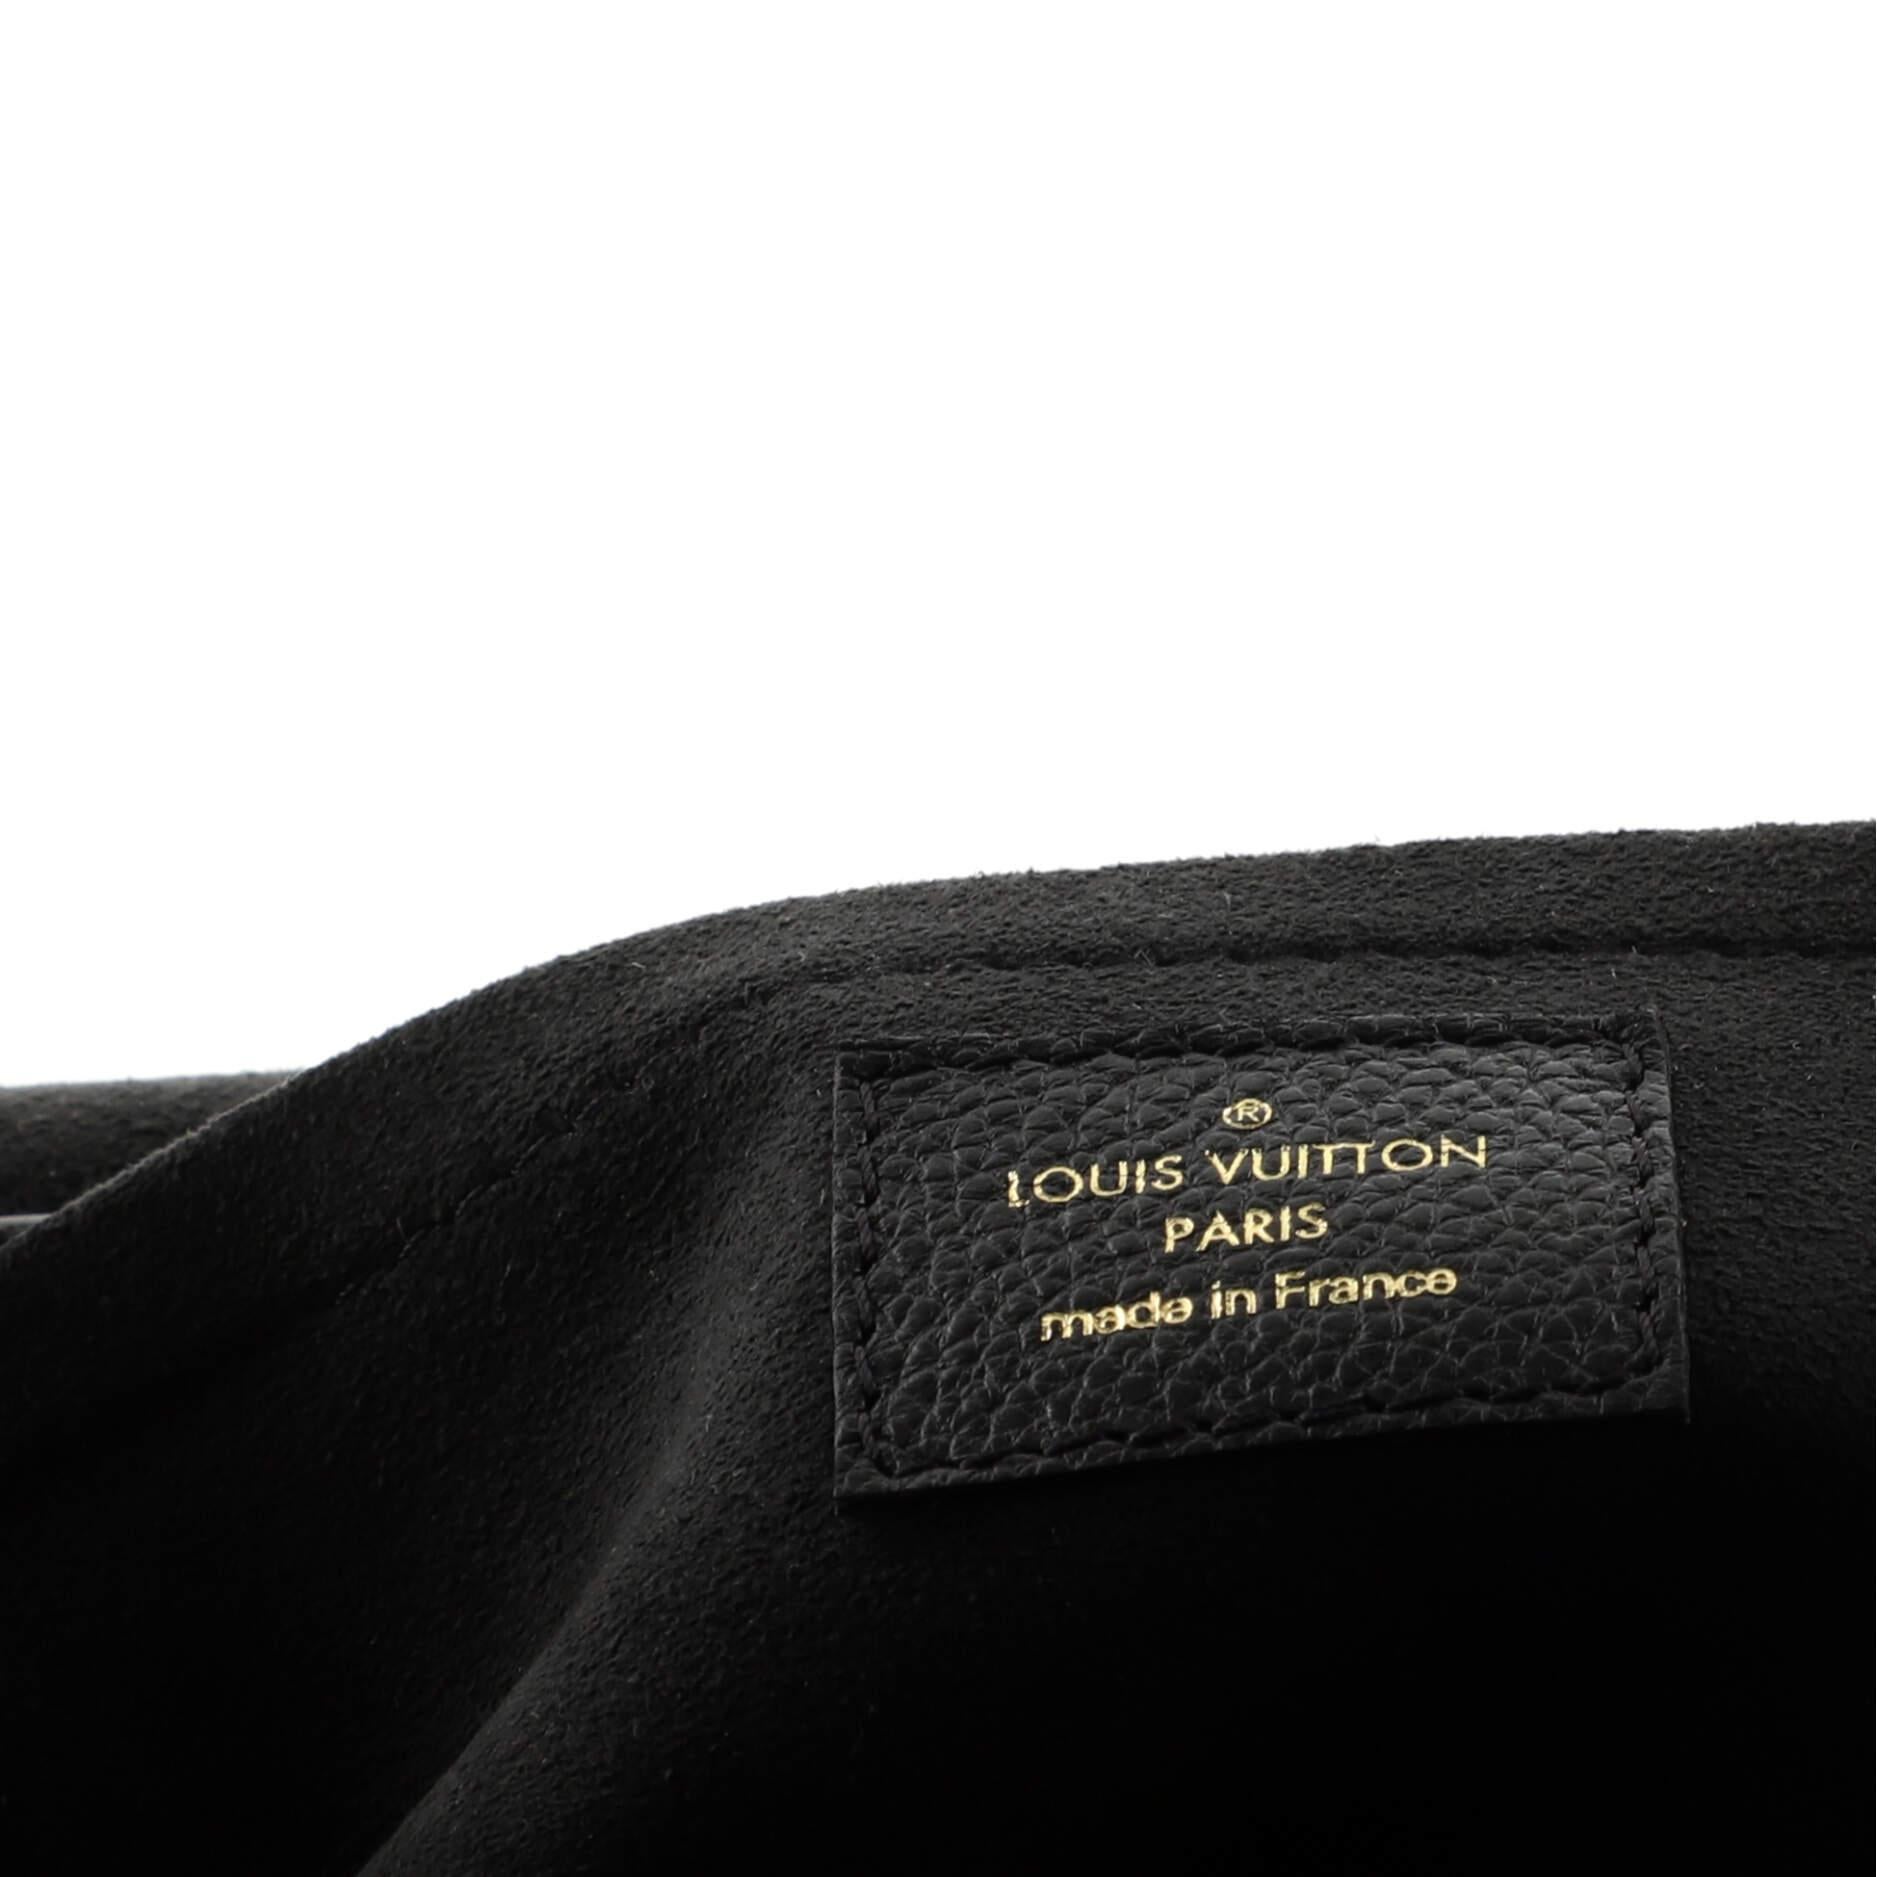 Women's or Men's Louis Vuitton Lockme Tender Handbag Leather